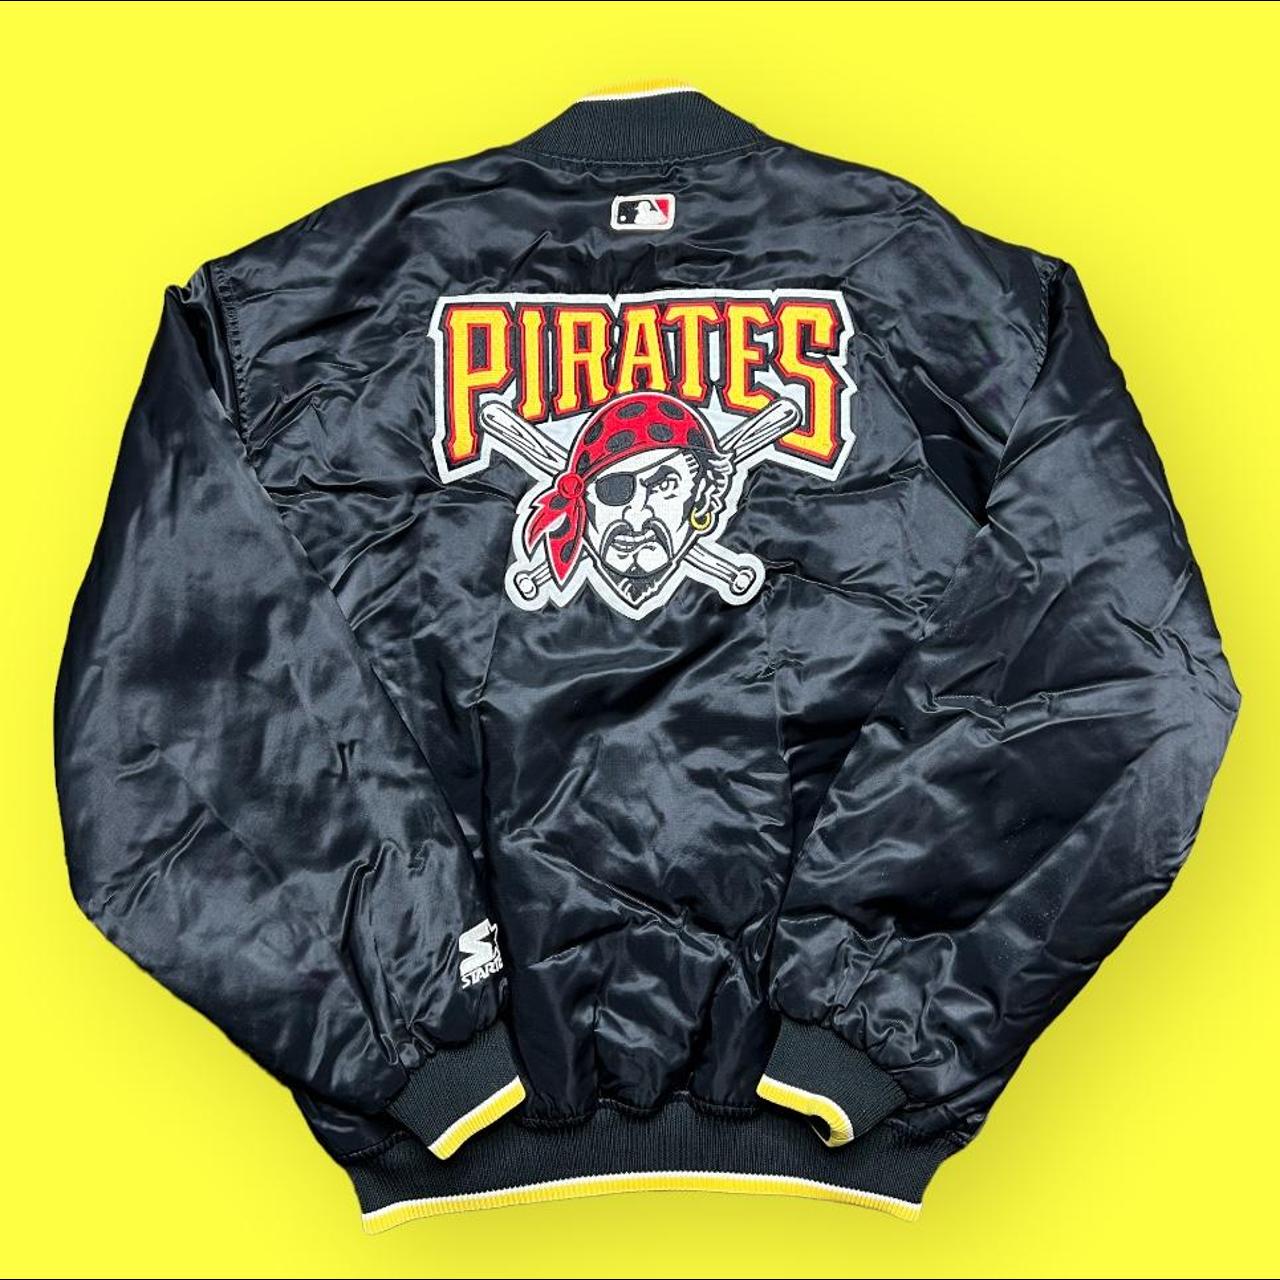 Vintage Pittsburgh Pirates Starter Jacket Detailed - Depop